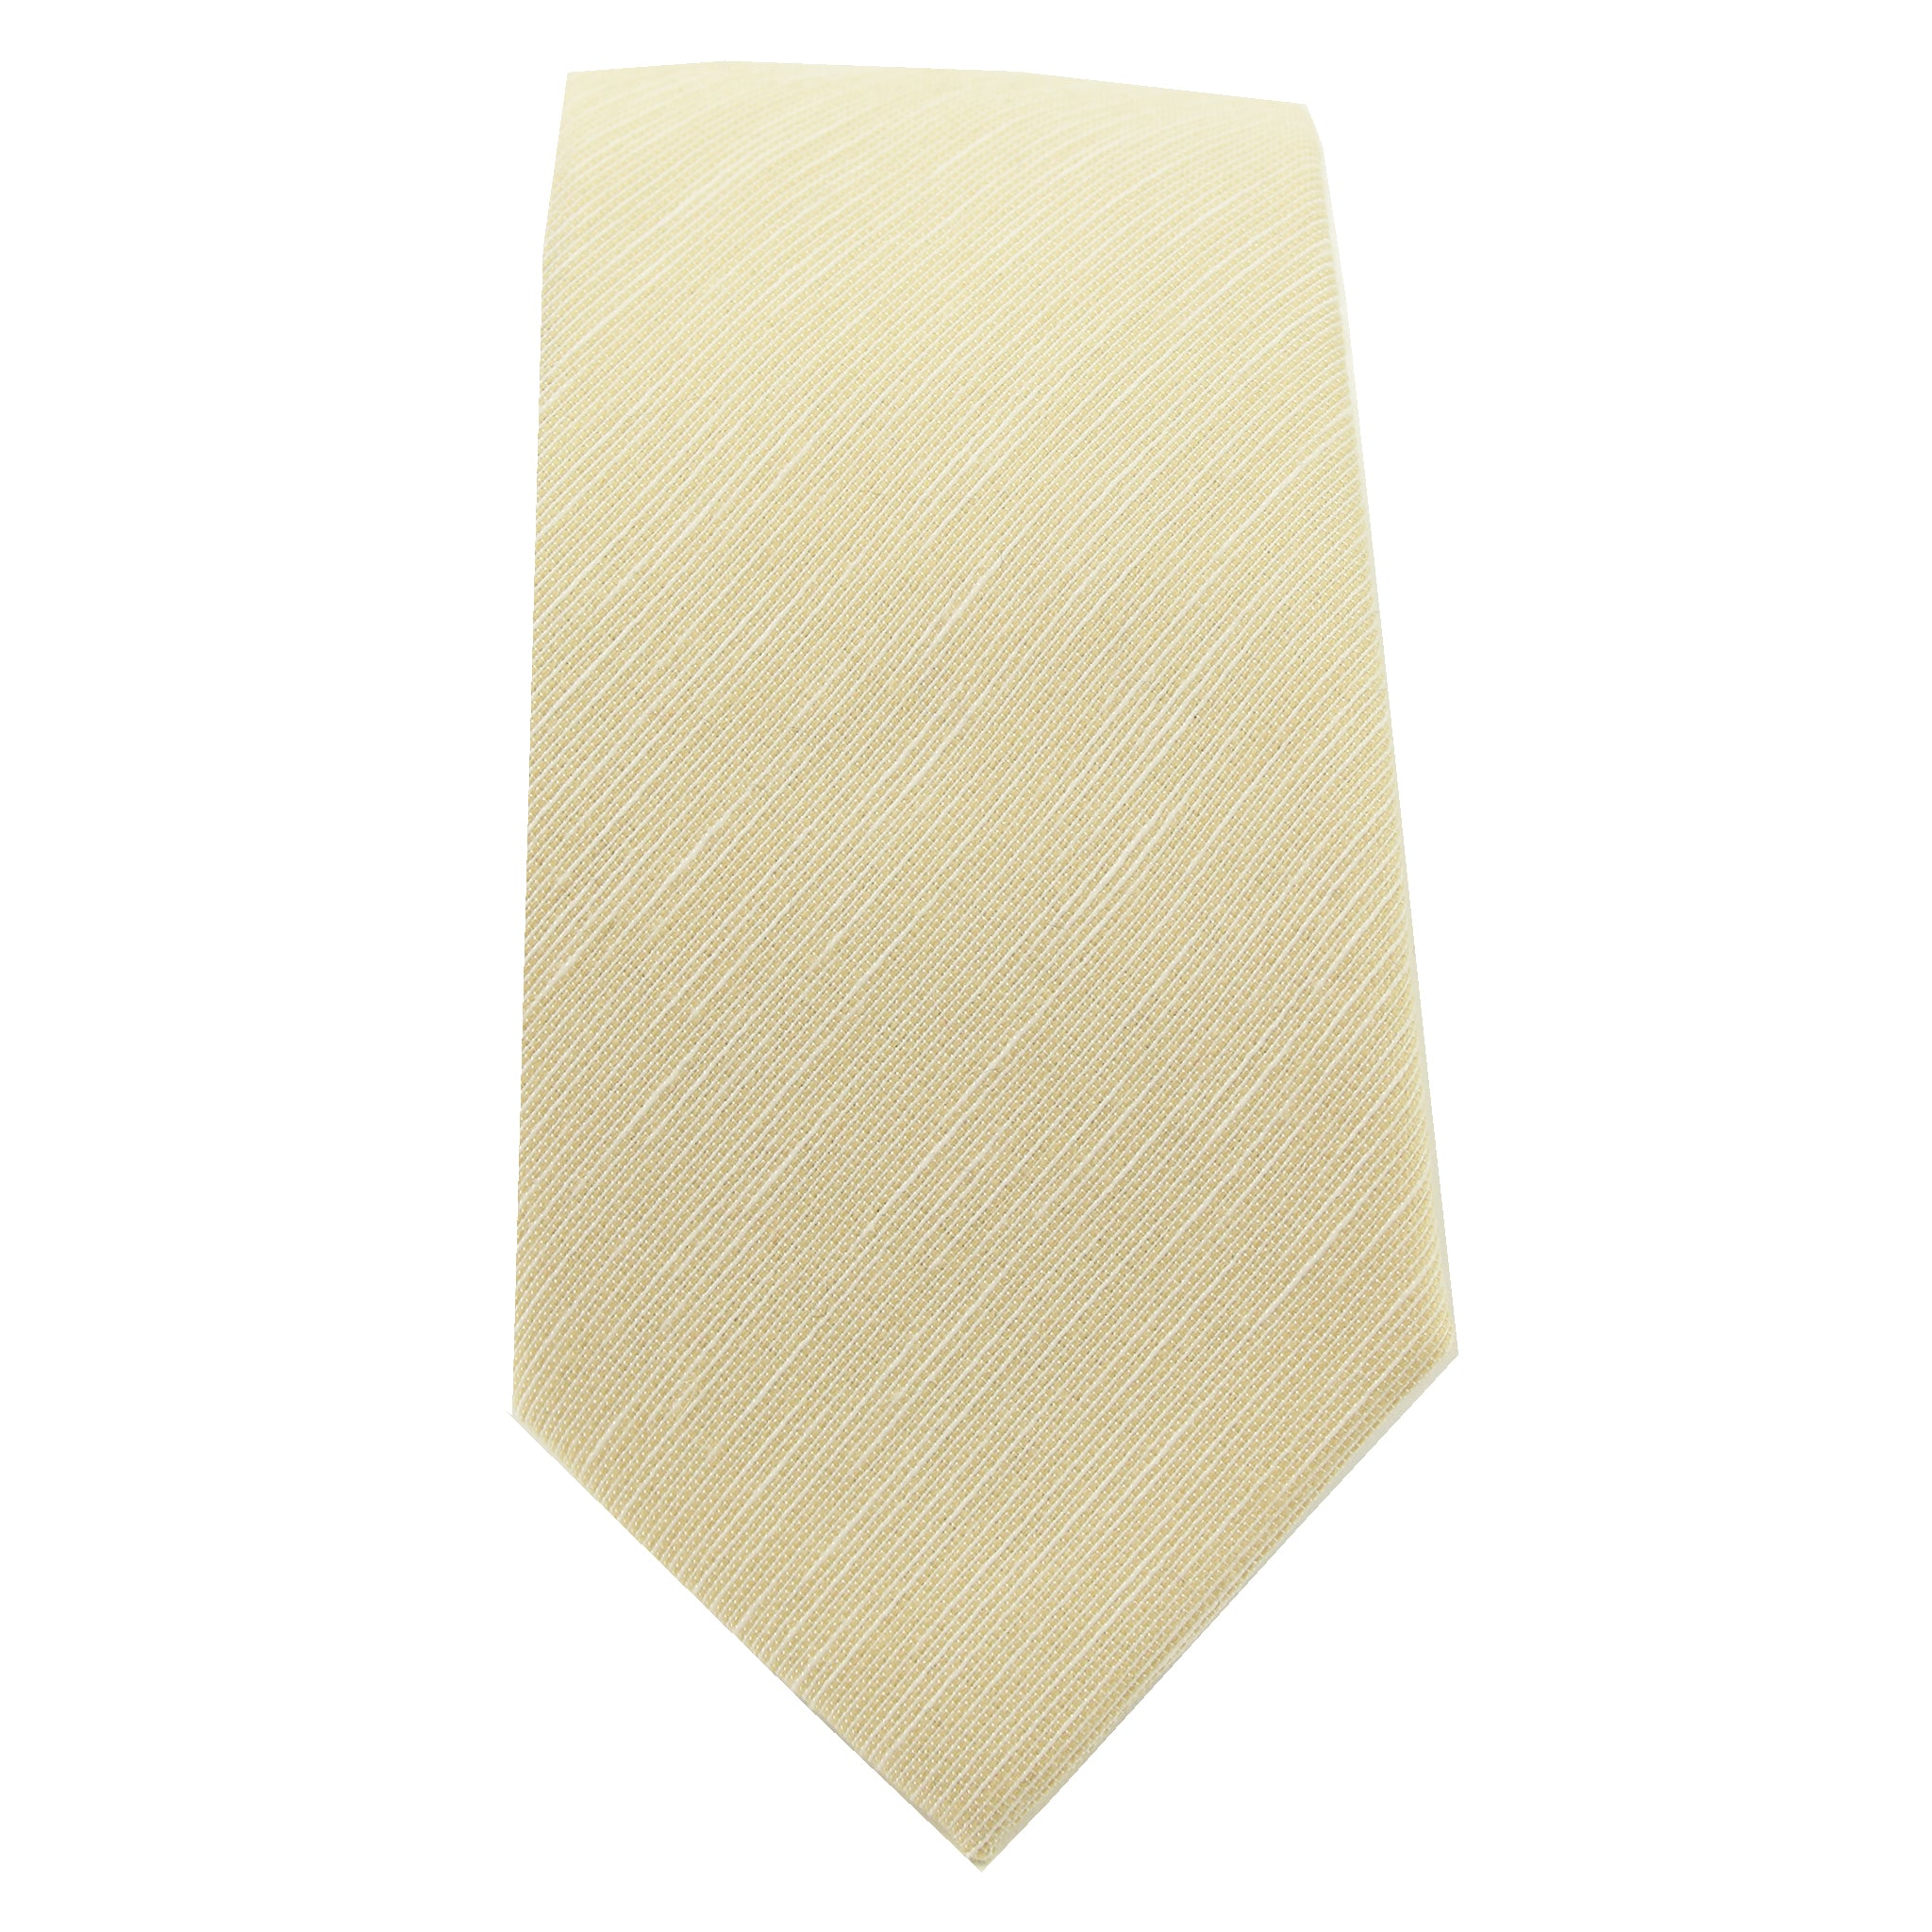 Khaki & White Linen Tie